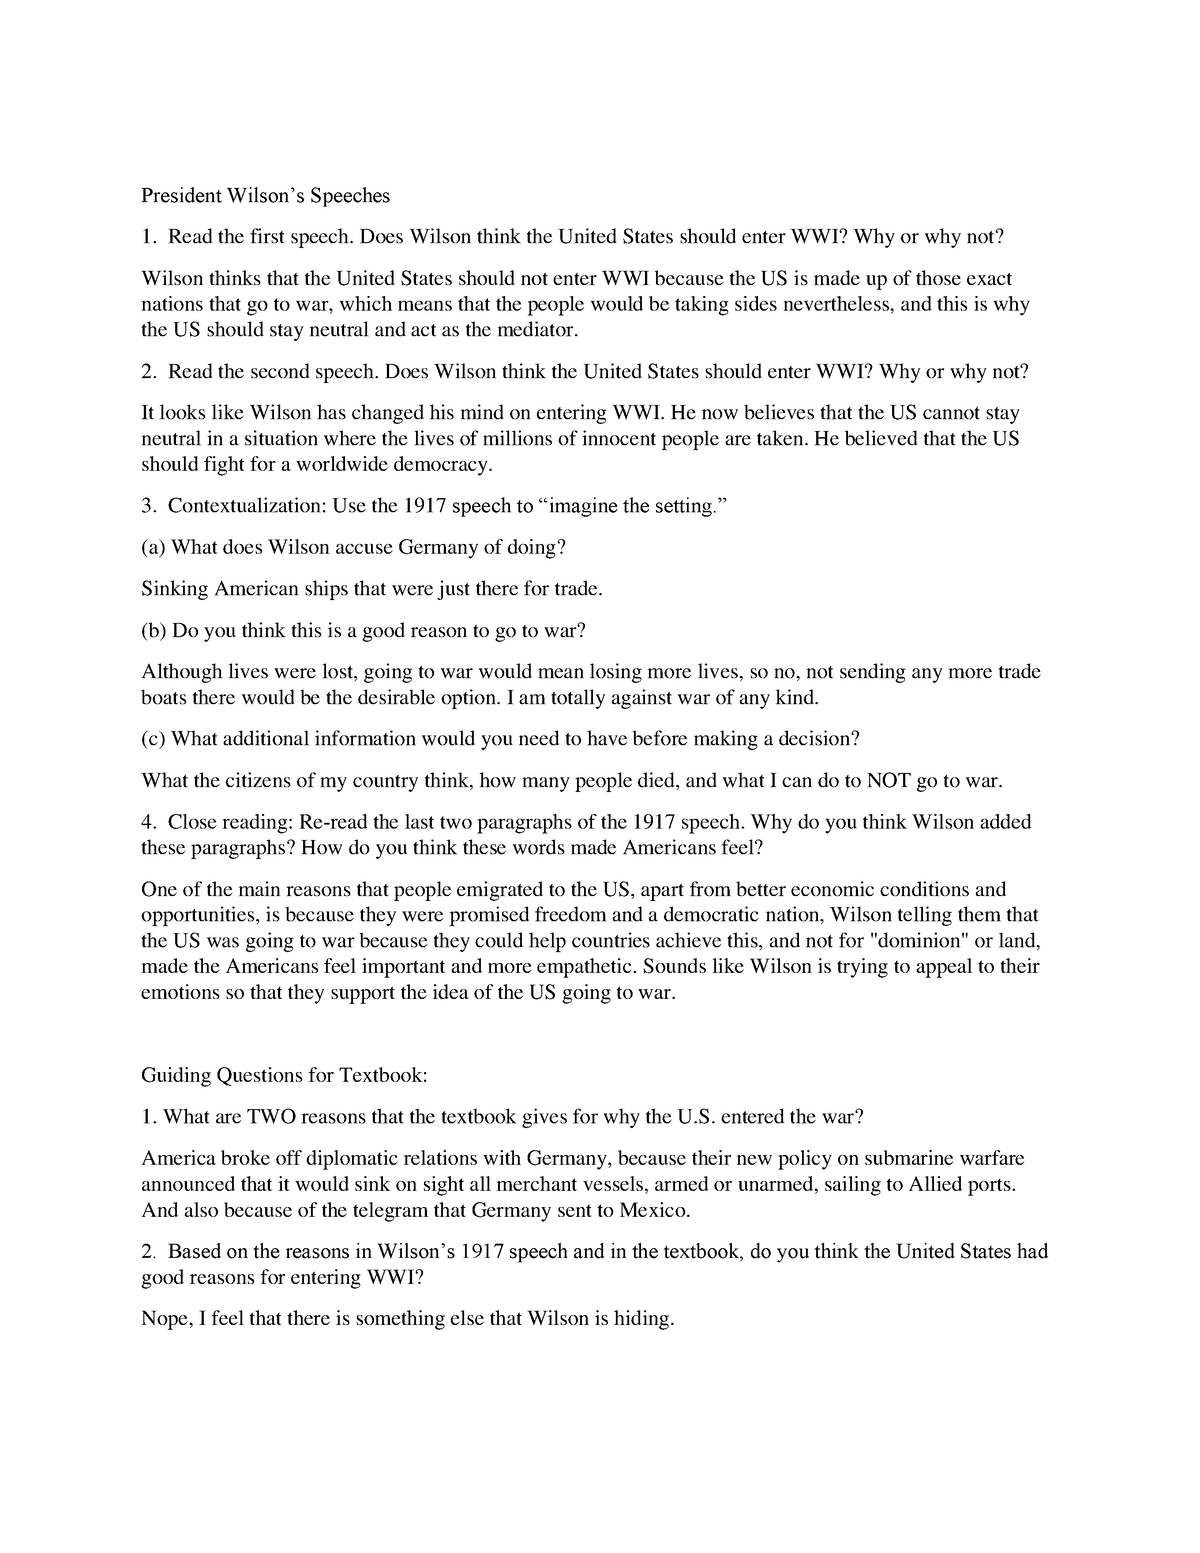 U.S Entry into WW1 - Mariami - President Wilson’s Speeches Read the ...